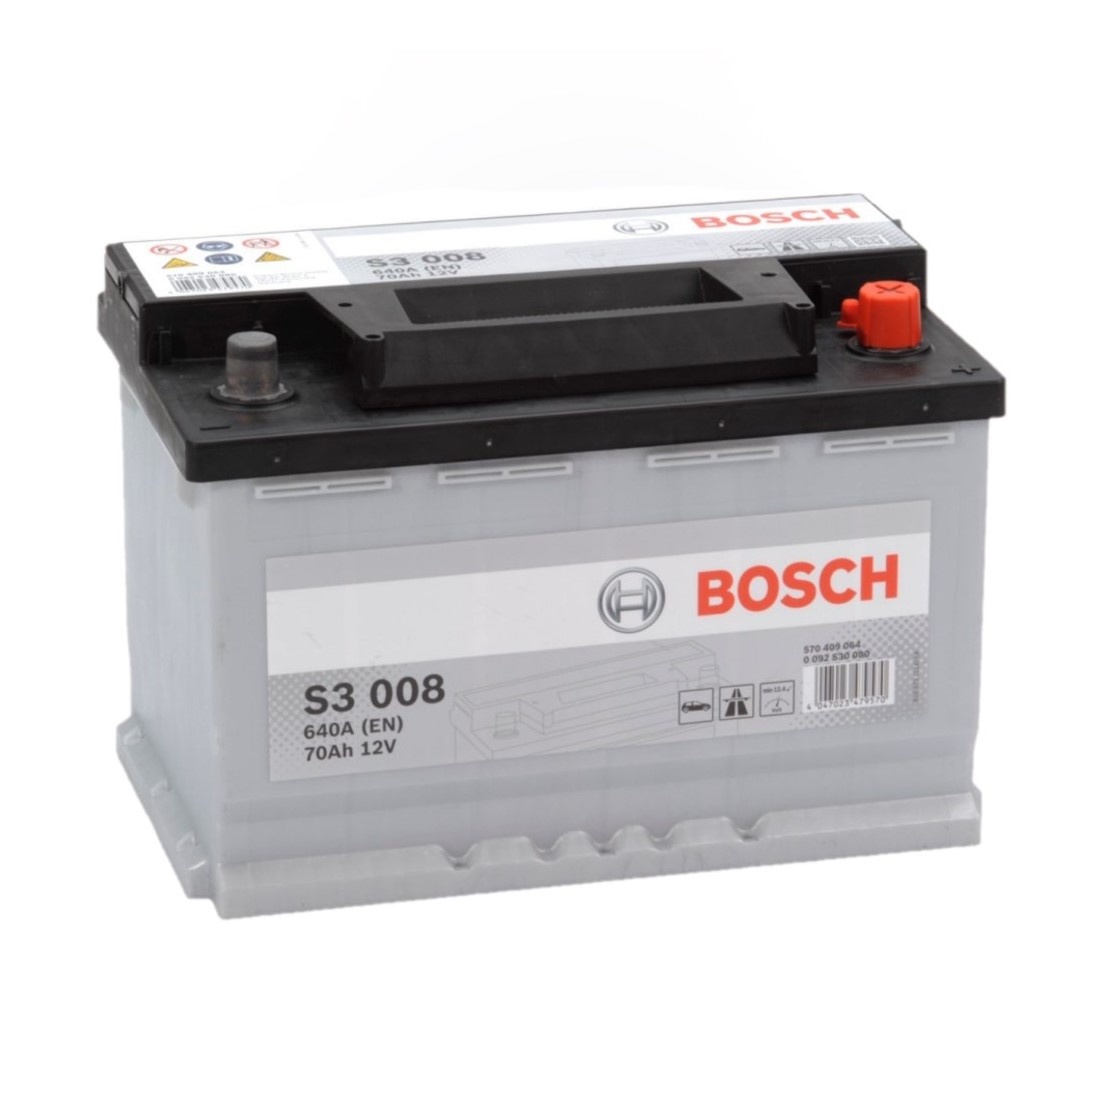 Perfect Pennenvriend laten vallen Bosch Auto accu 12 volt 70 ah Type S3008 - Accu Service Holland